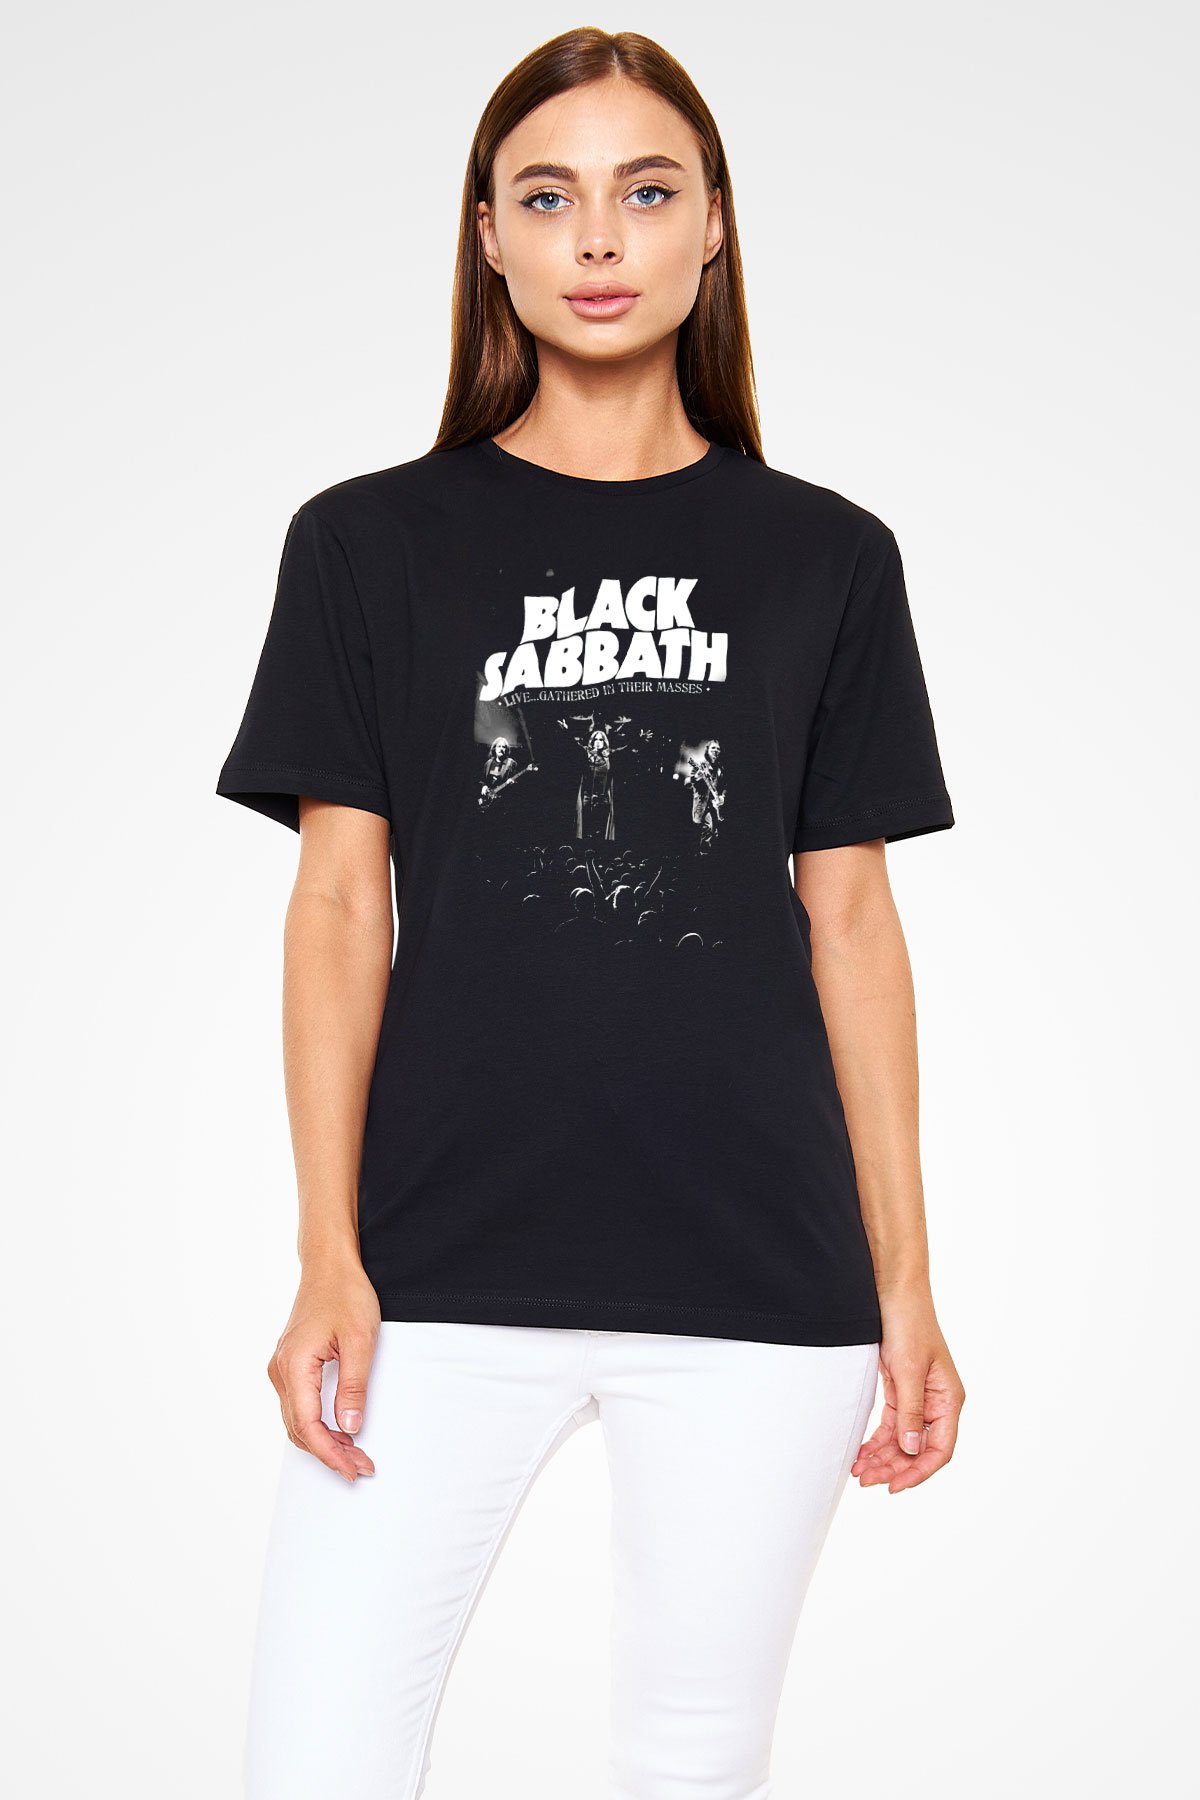 Black Sabbath Gathered İn Their Masses Siyah Unisex Tişört T-Shirt -  TişörtFabrikası